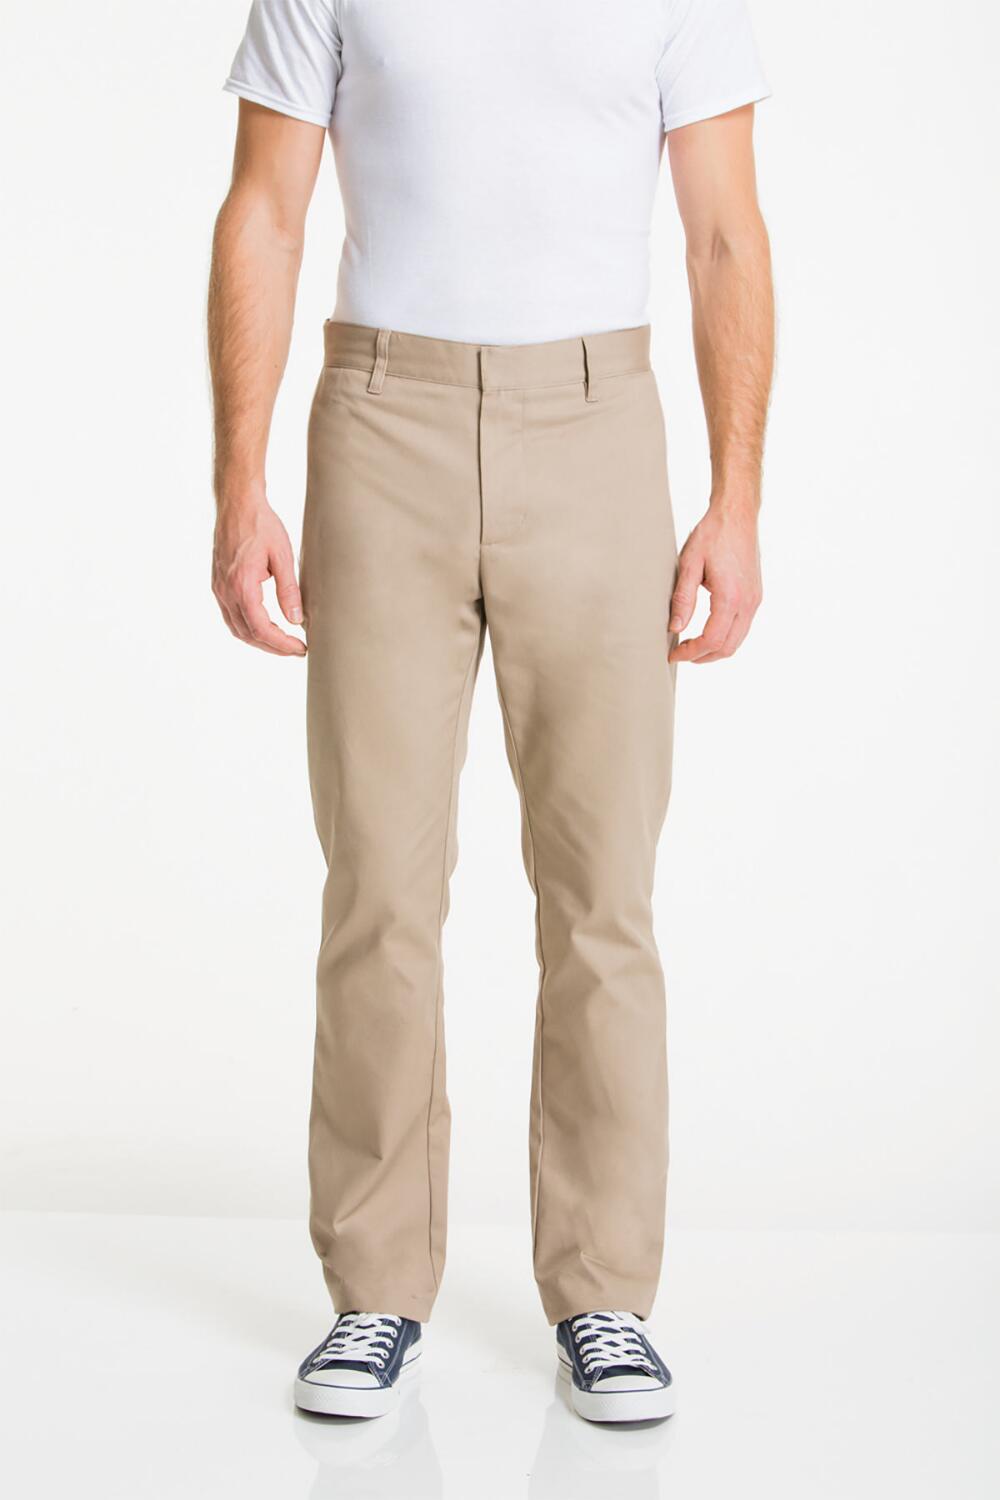 Adult Men Slim / Skinny Pants: Waist Sizes 46 - 54 – Montgomery